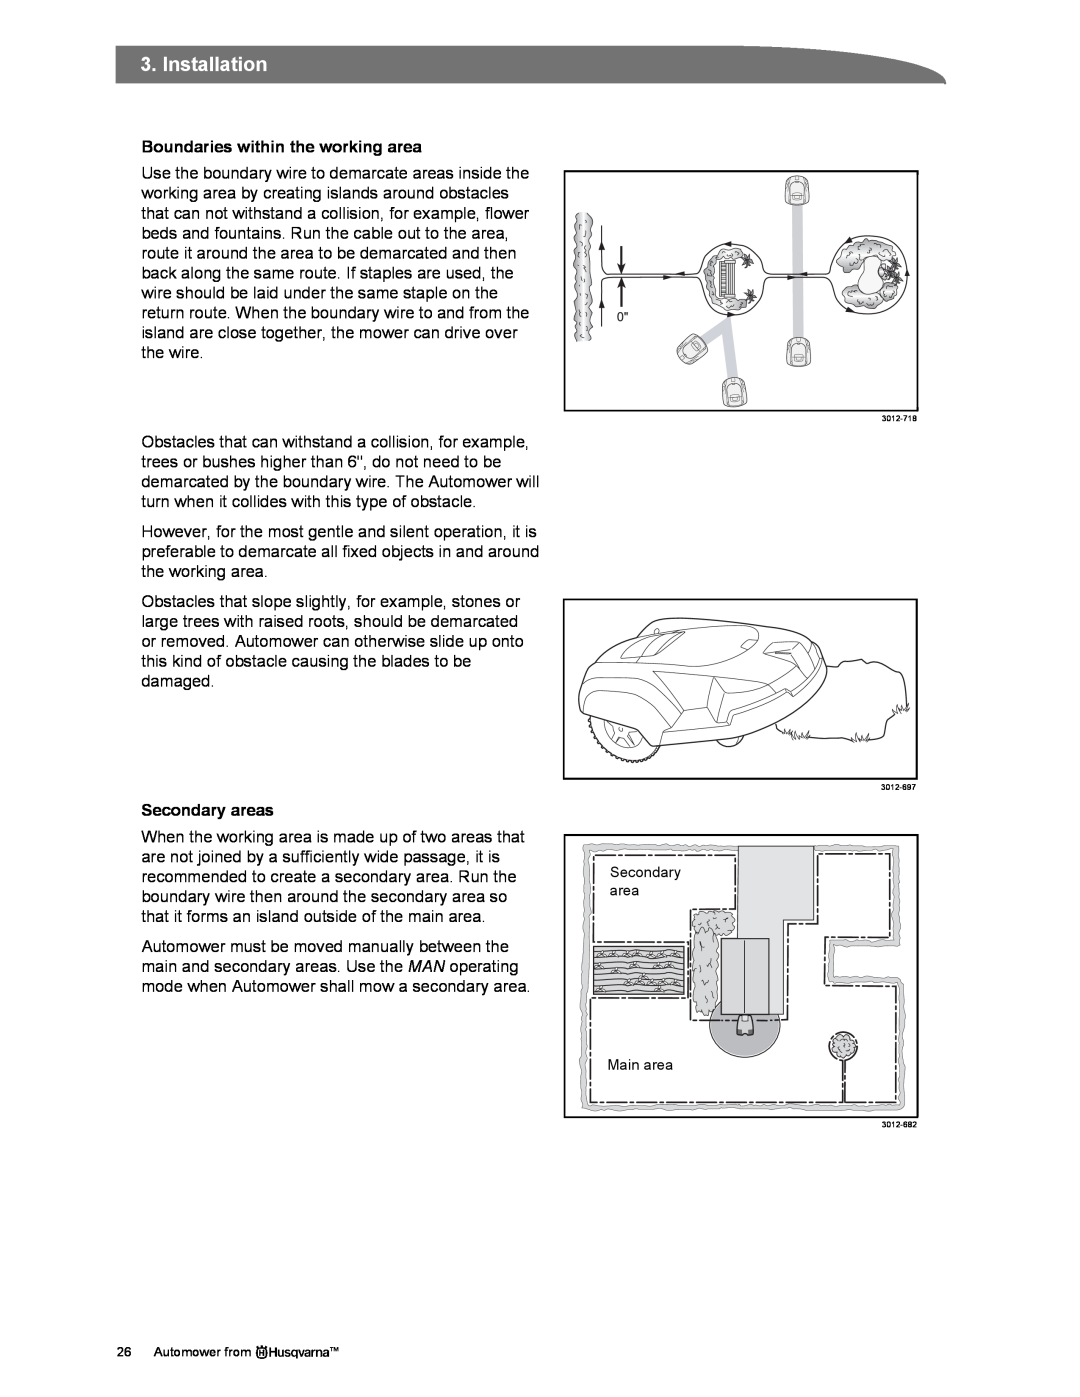 Husqvarna Automower manual Boundaries within the working area, Secondary areas, Installation, Main area 